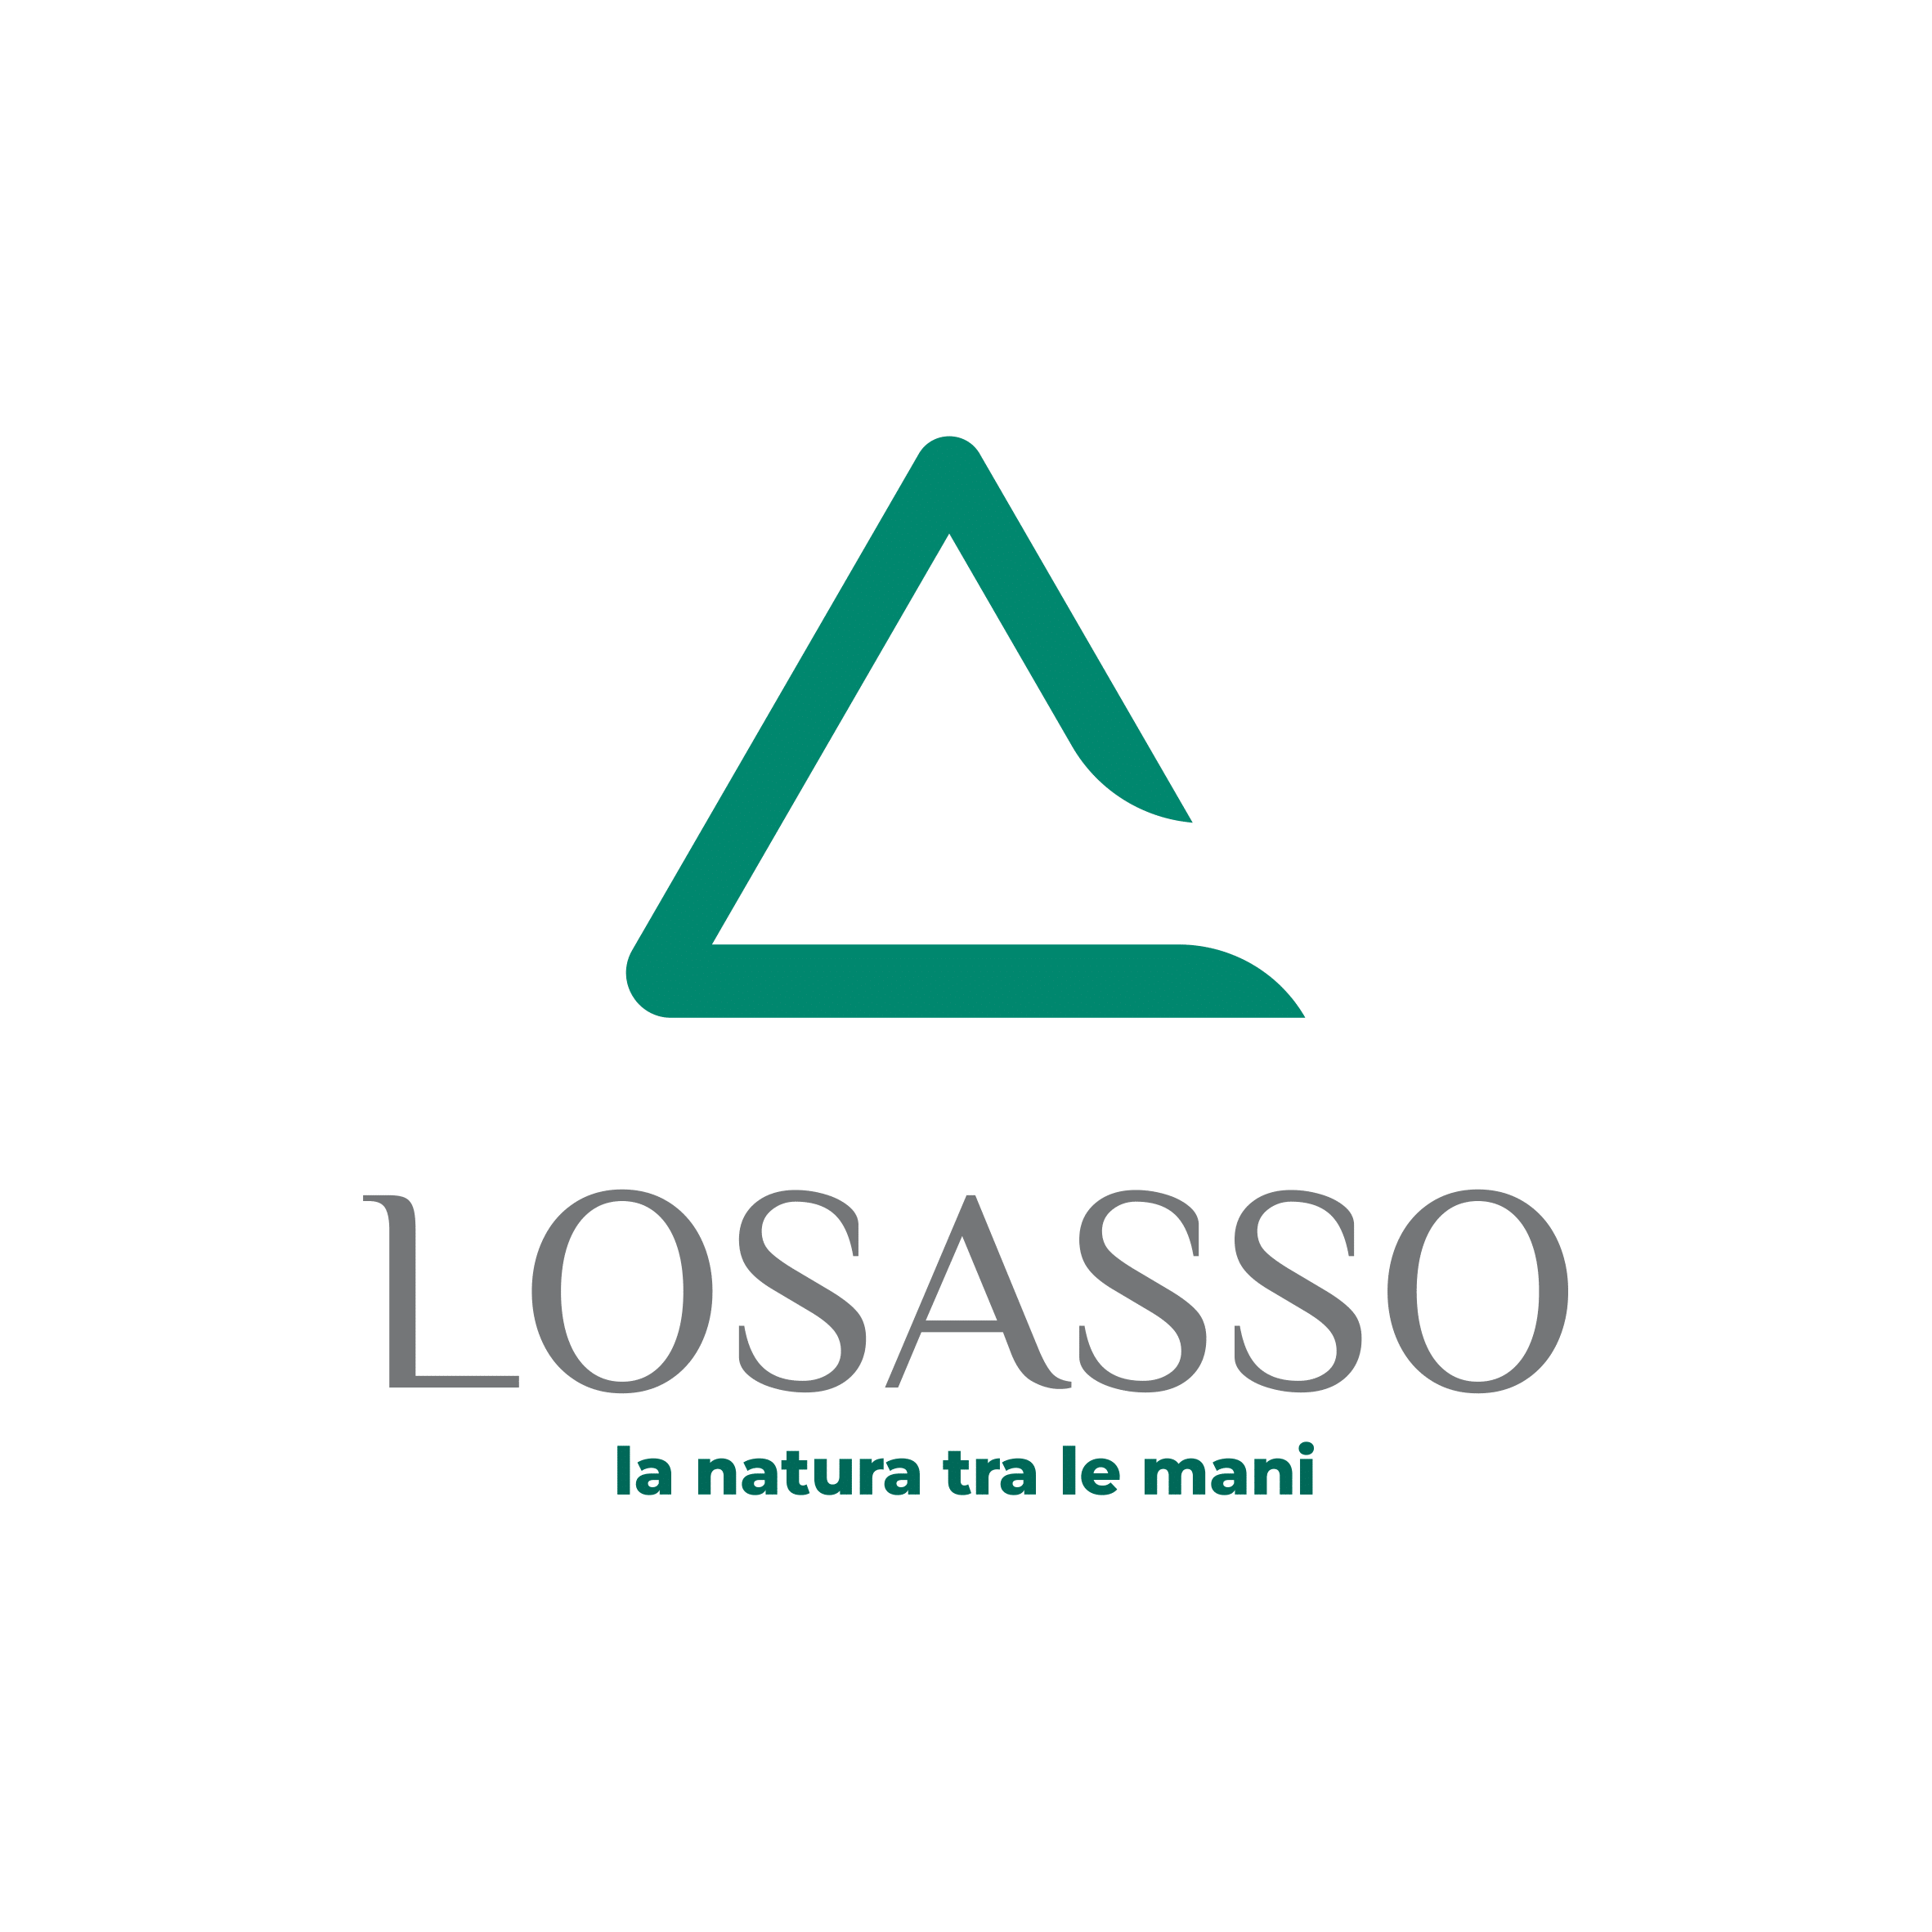 Losasso_logo_Esecutivo2021-1